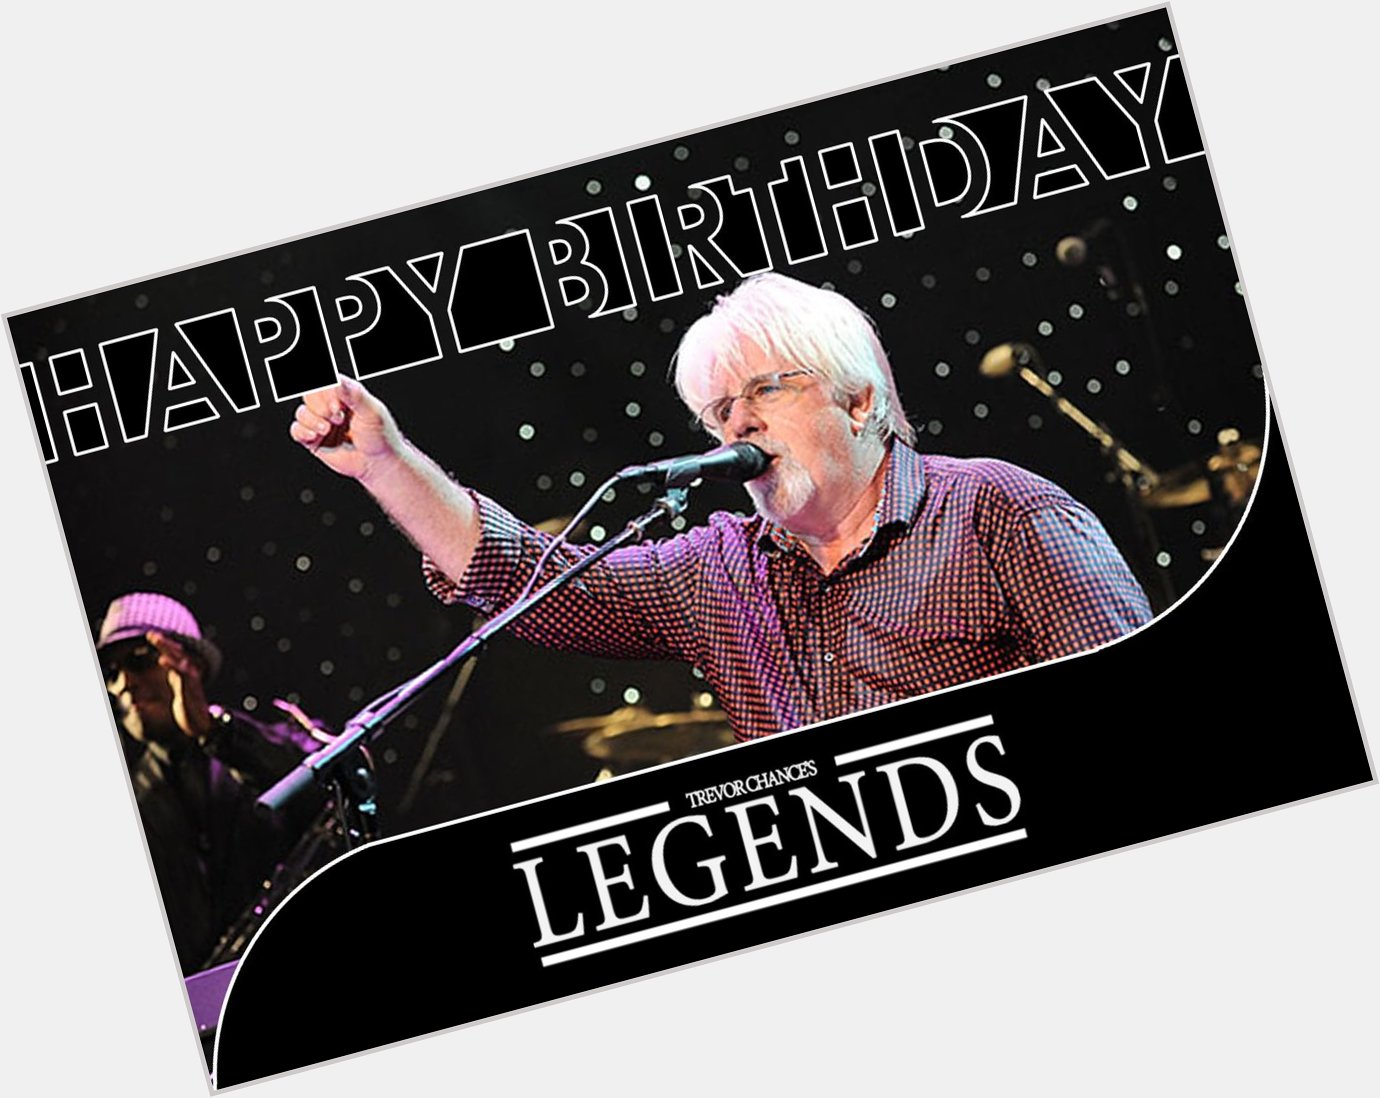 Happy Birthday to legendary singer, Michael McDonald...  